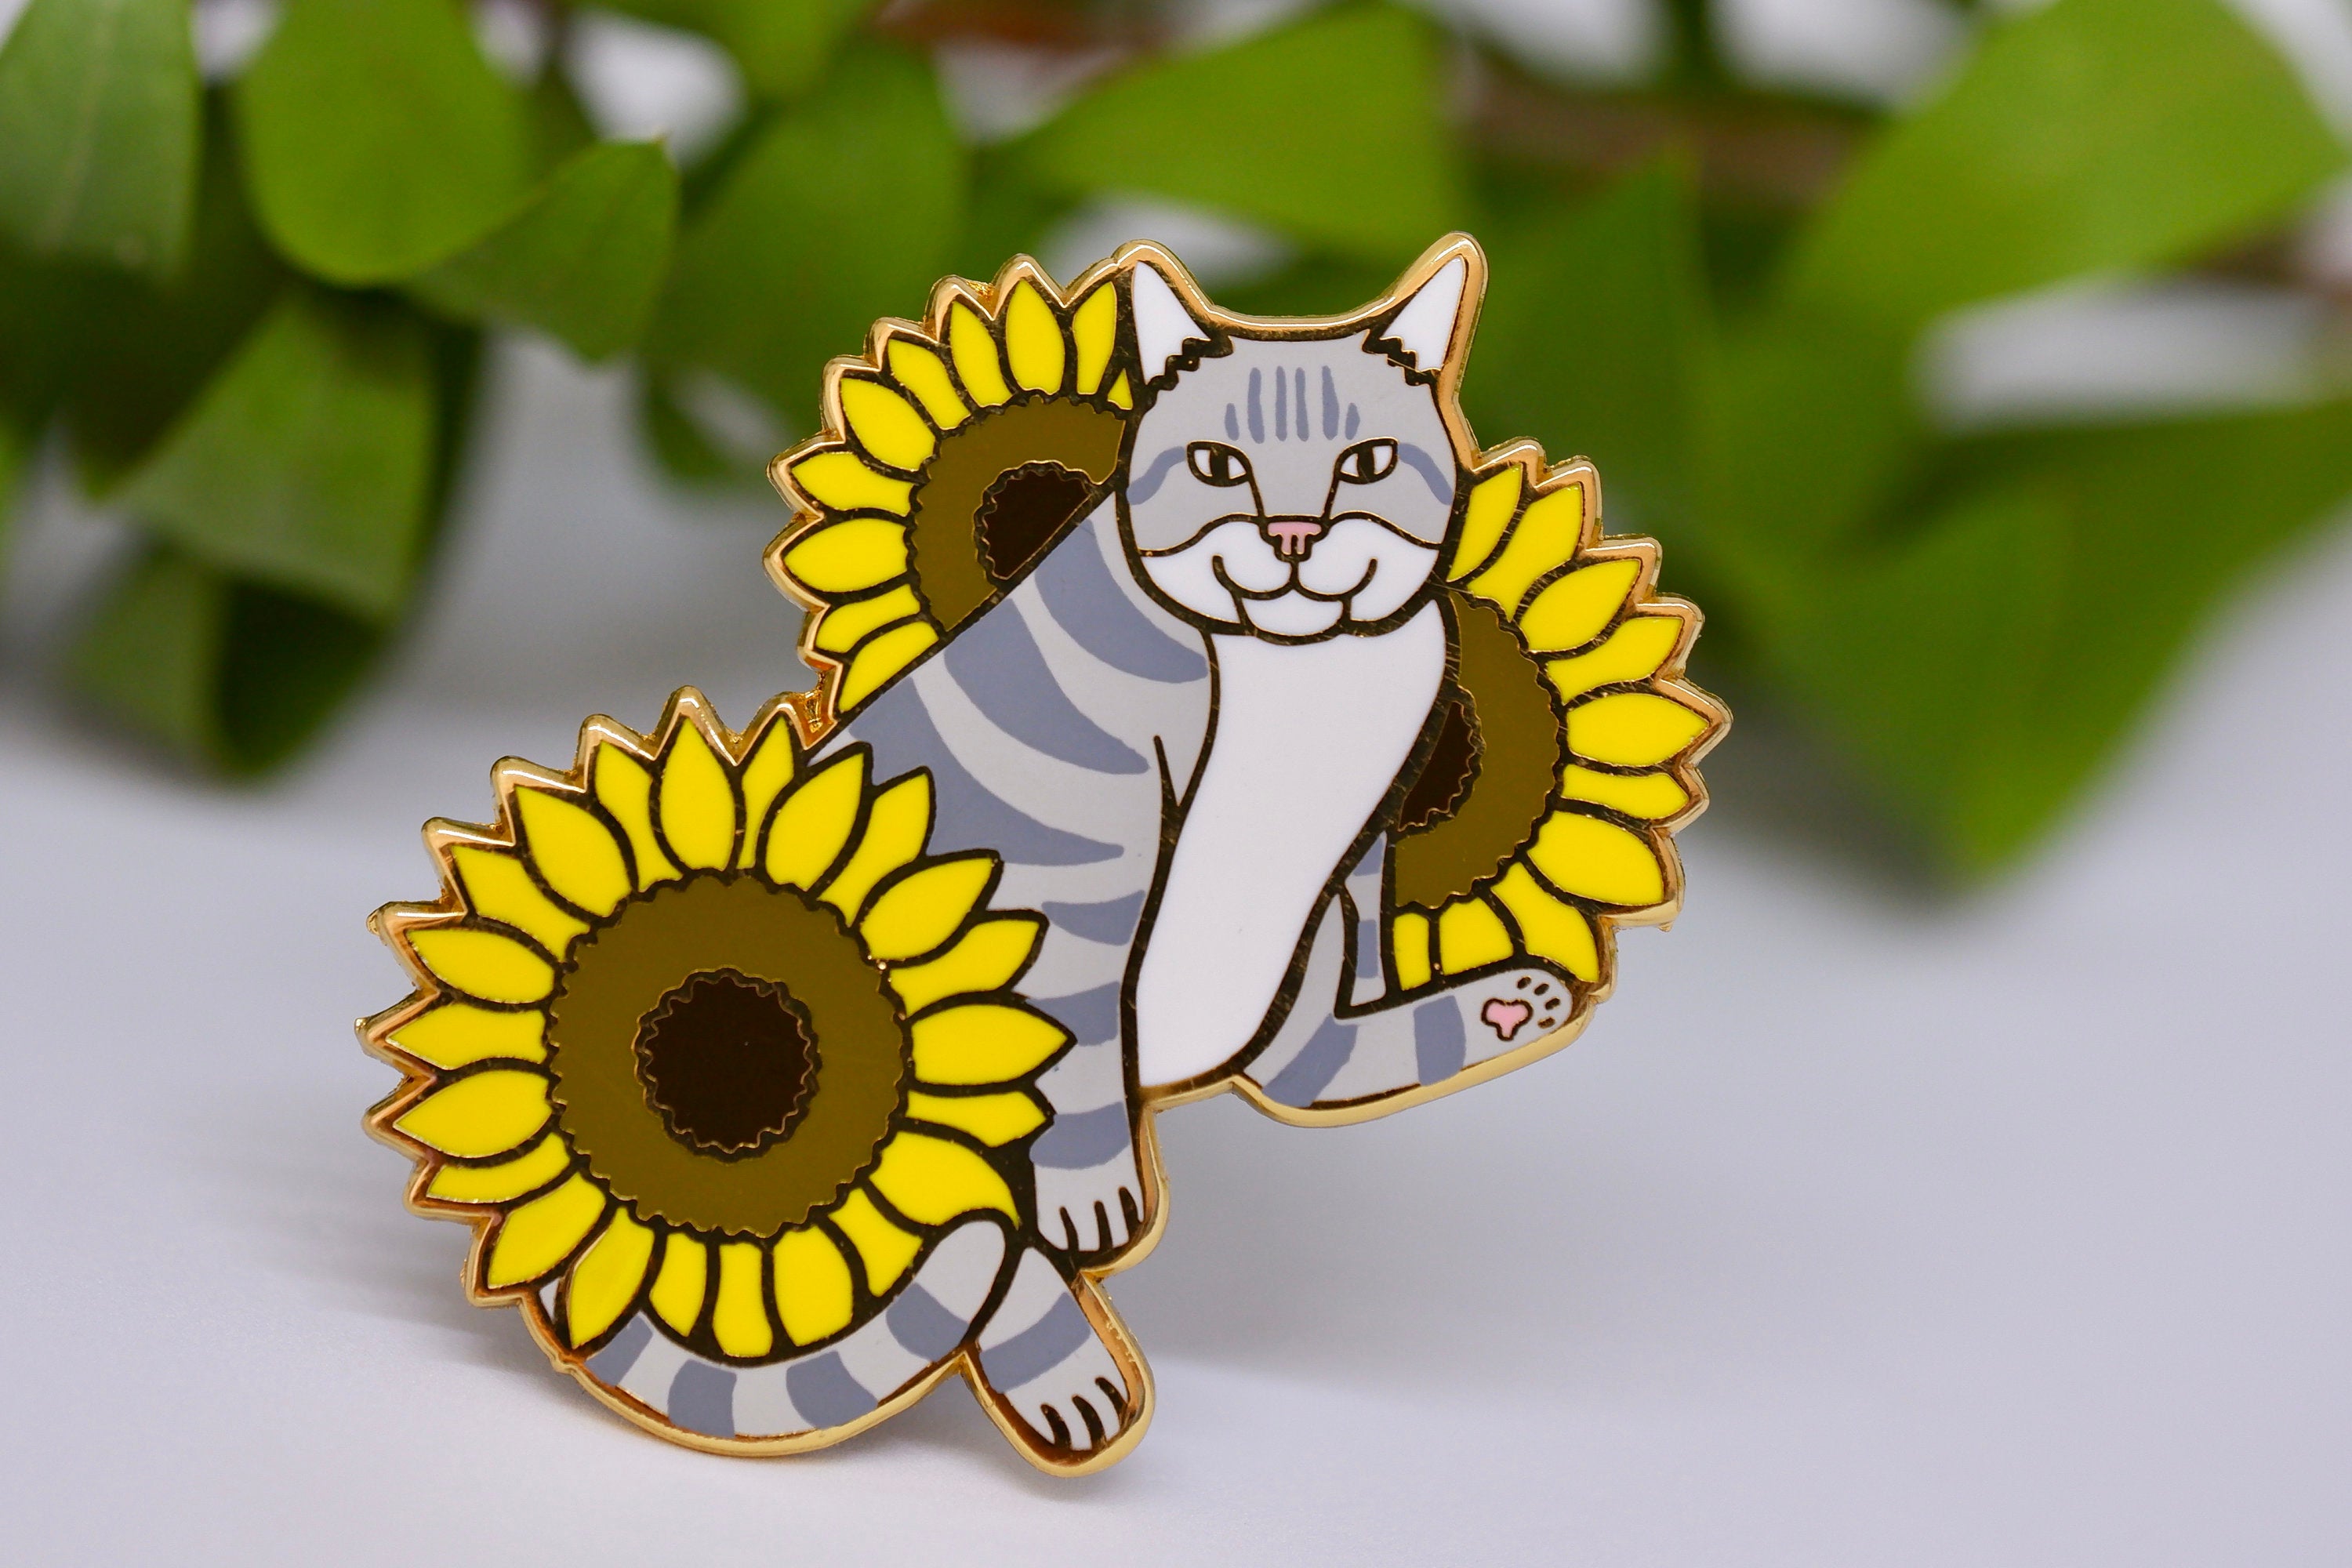 Cat and Sunflowers Hard Enamel Pin - Grey and White Tabby Cat - Lapel Pin, Cloissone Badge